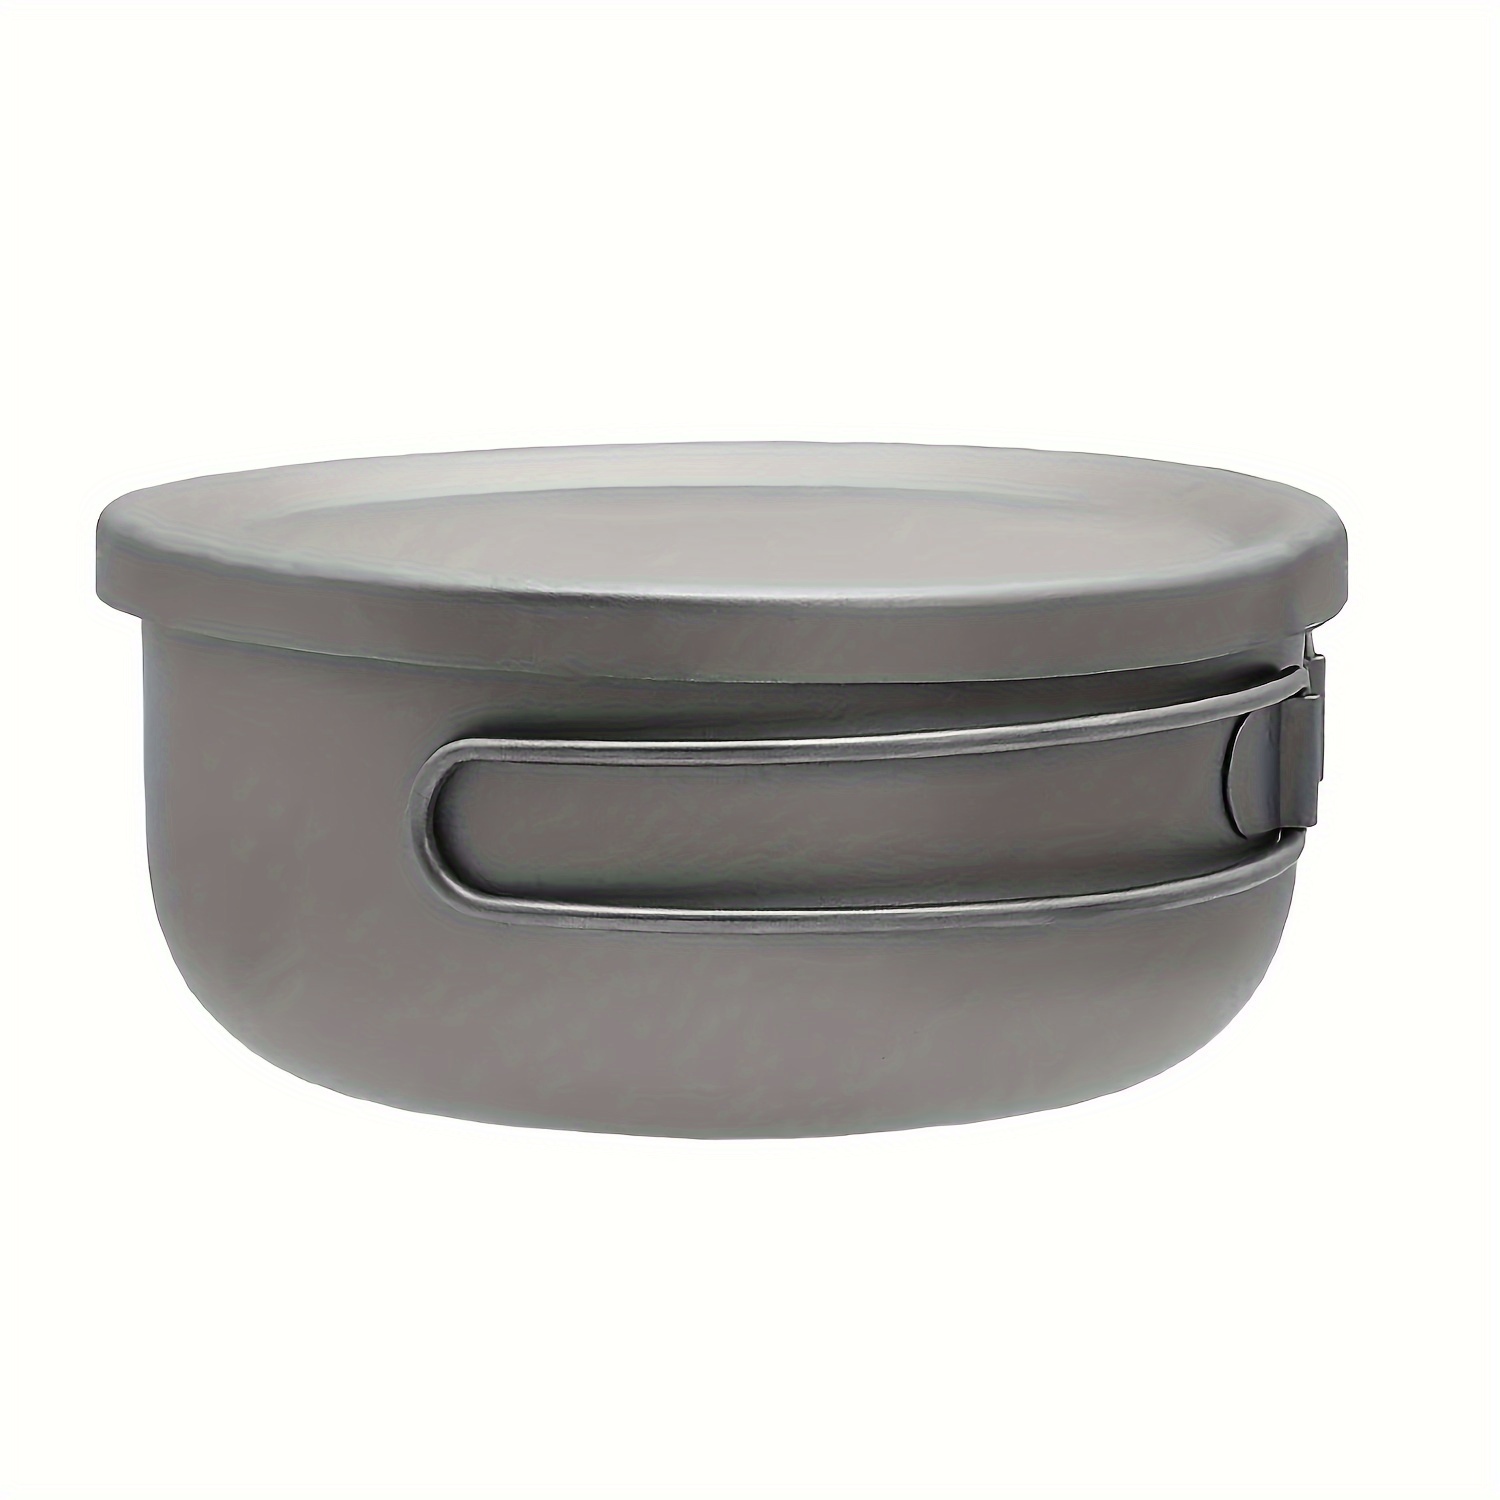 Toaks Lightweight Titanium Frying Pan With Foldable Handle : Target